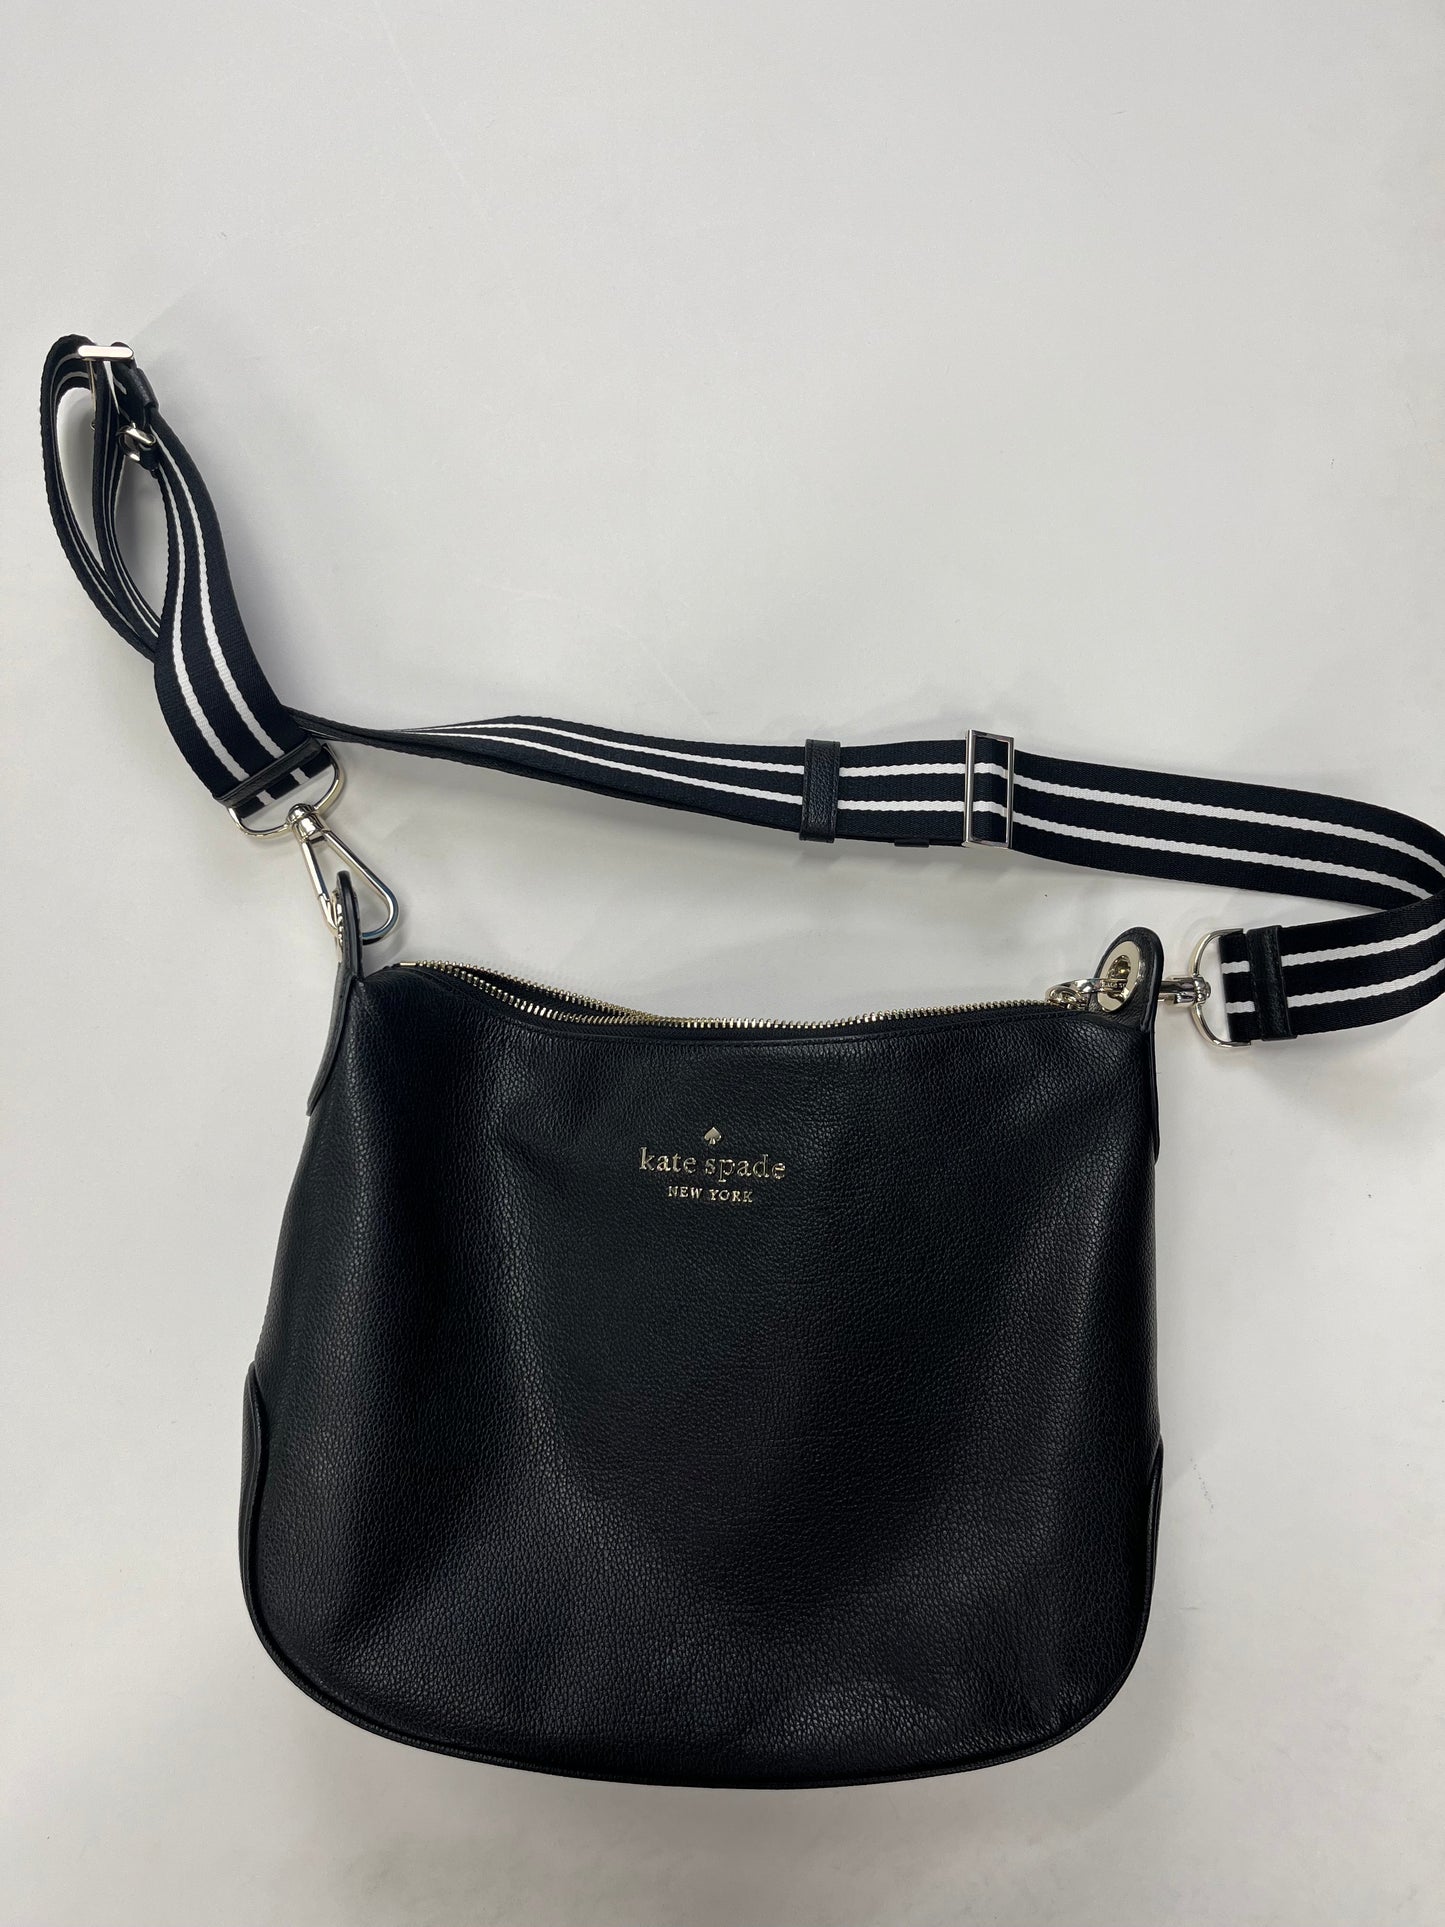 Black Handbag Leather Kate Spade, Size Medium